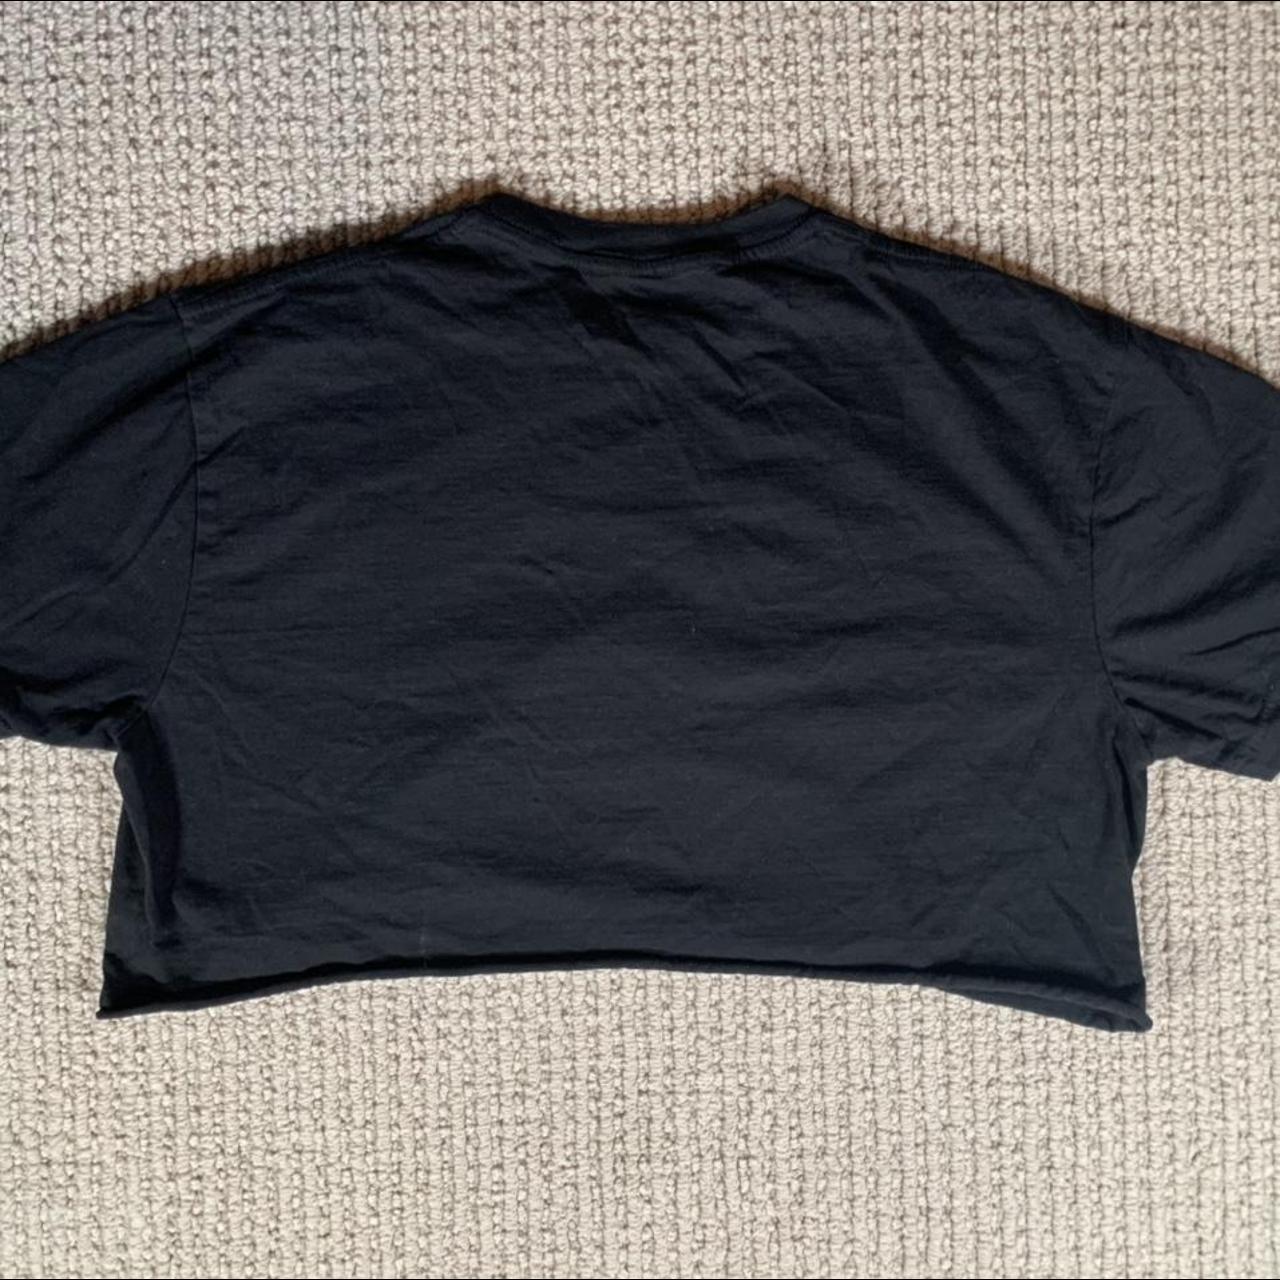 Product Image 4 - Prince Shirt Womens Large Black